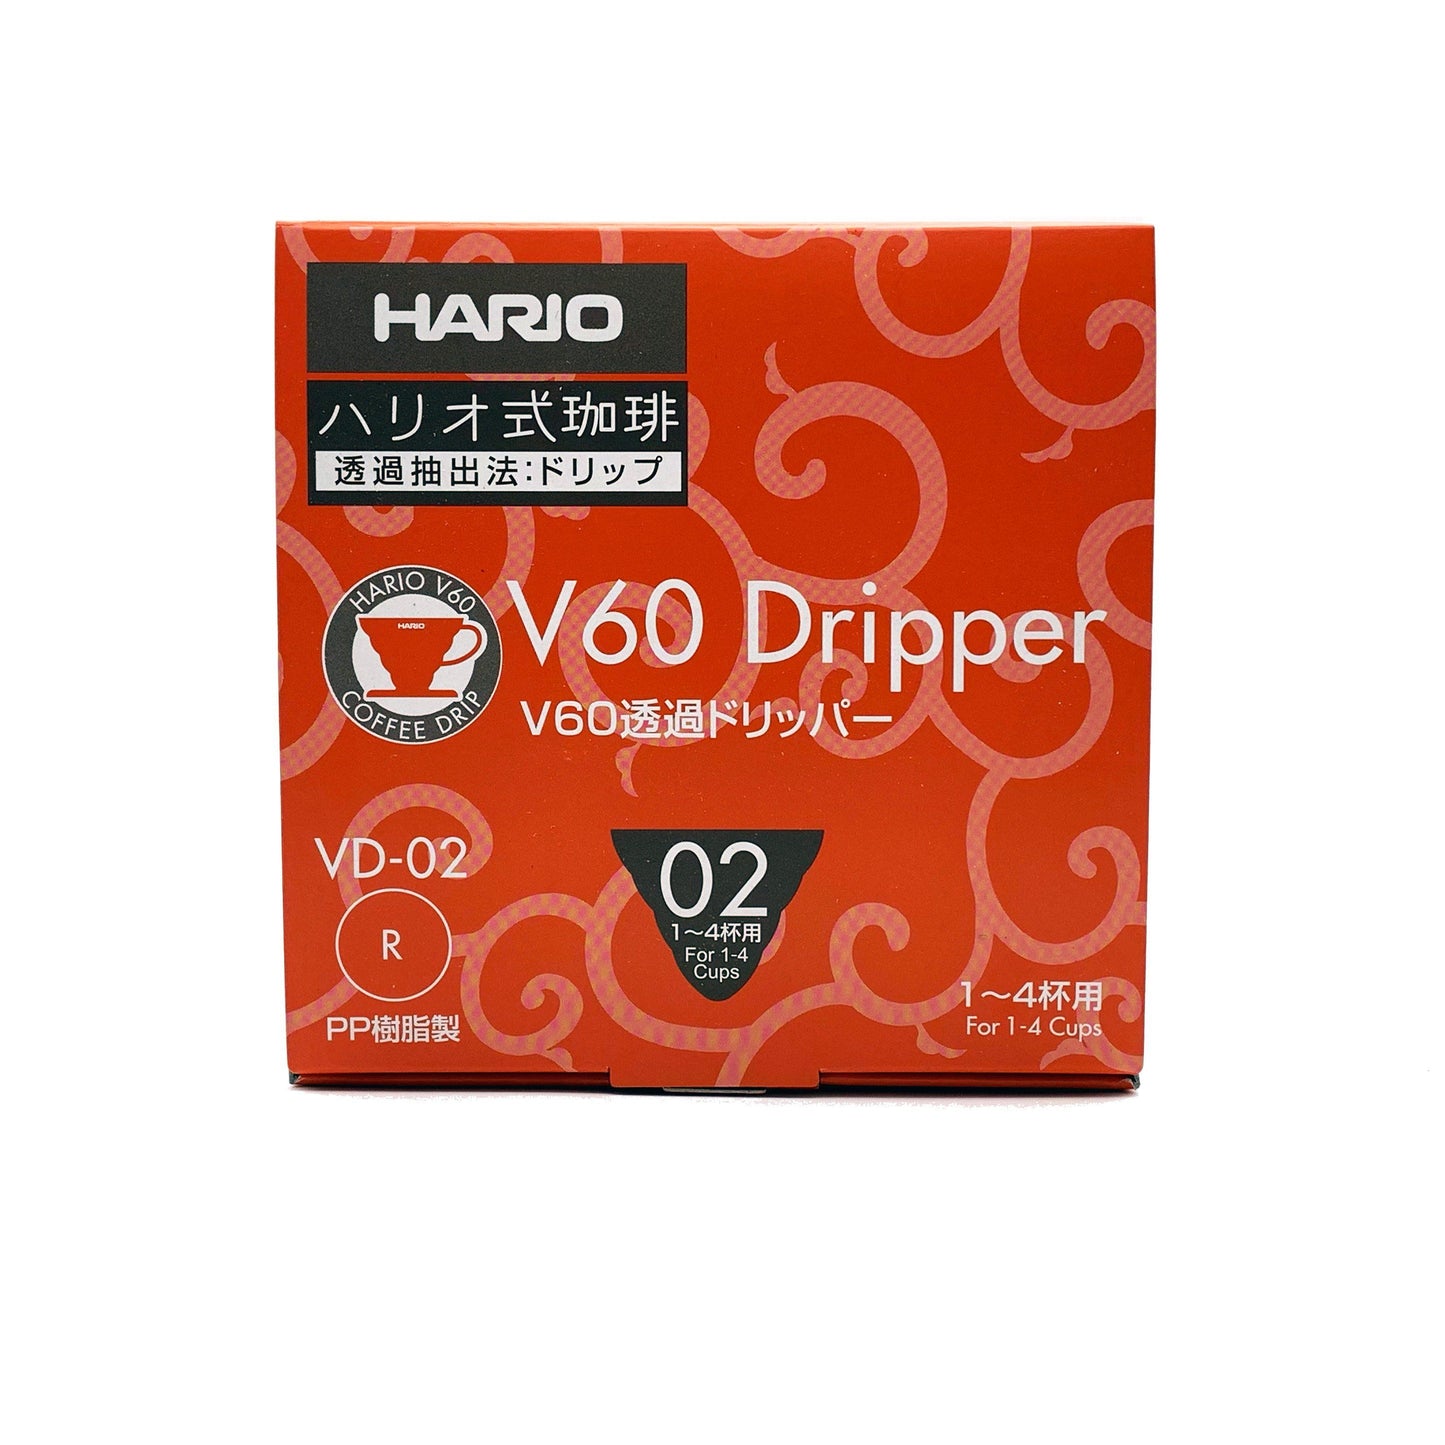 V60 Dripper (HARIO) Hermanos Colombian Coffee Roasters 